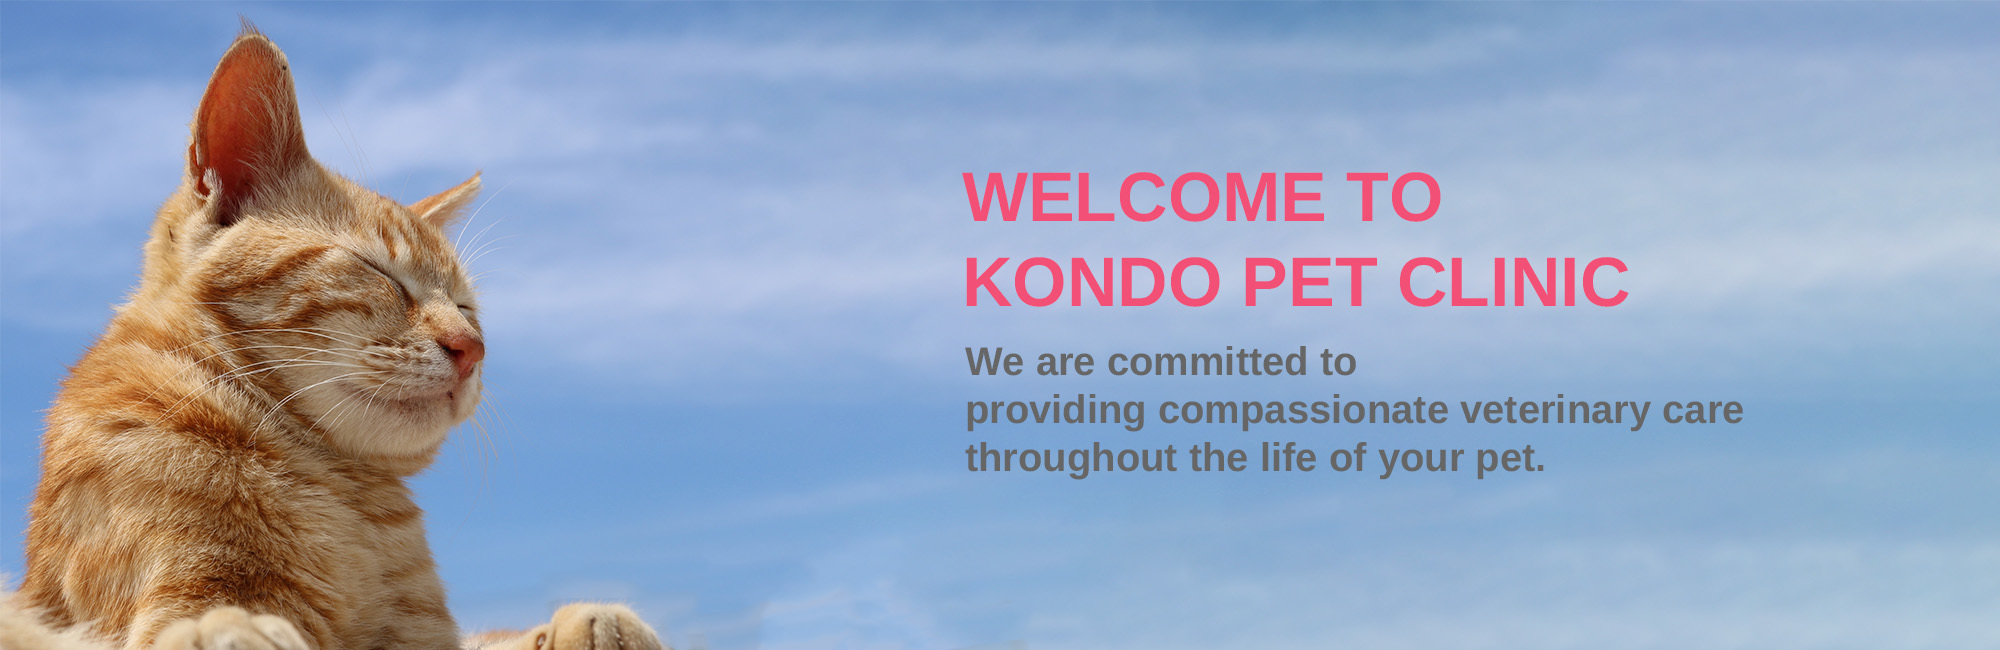 WELCOME TO KONDO PET CLINIC